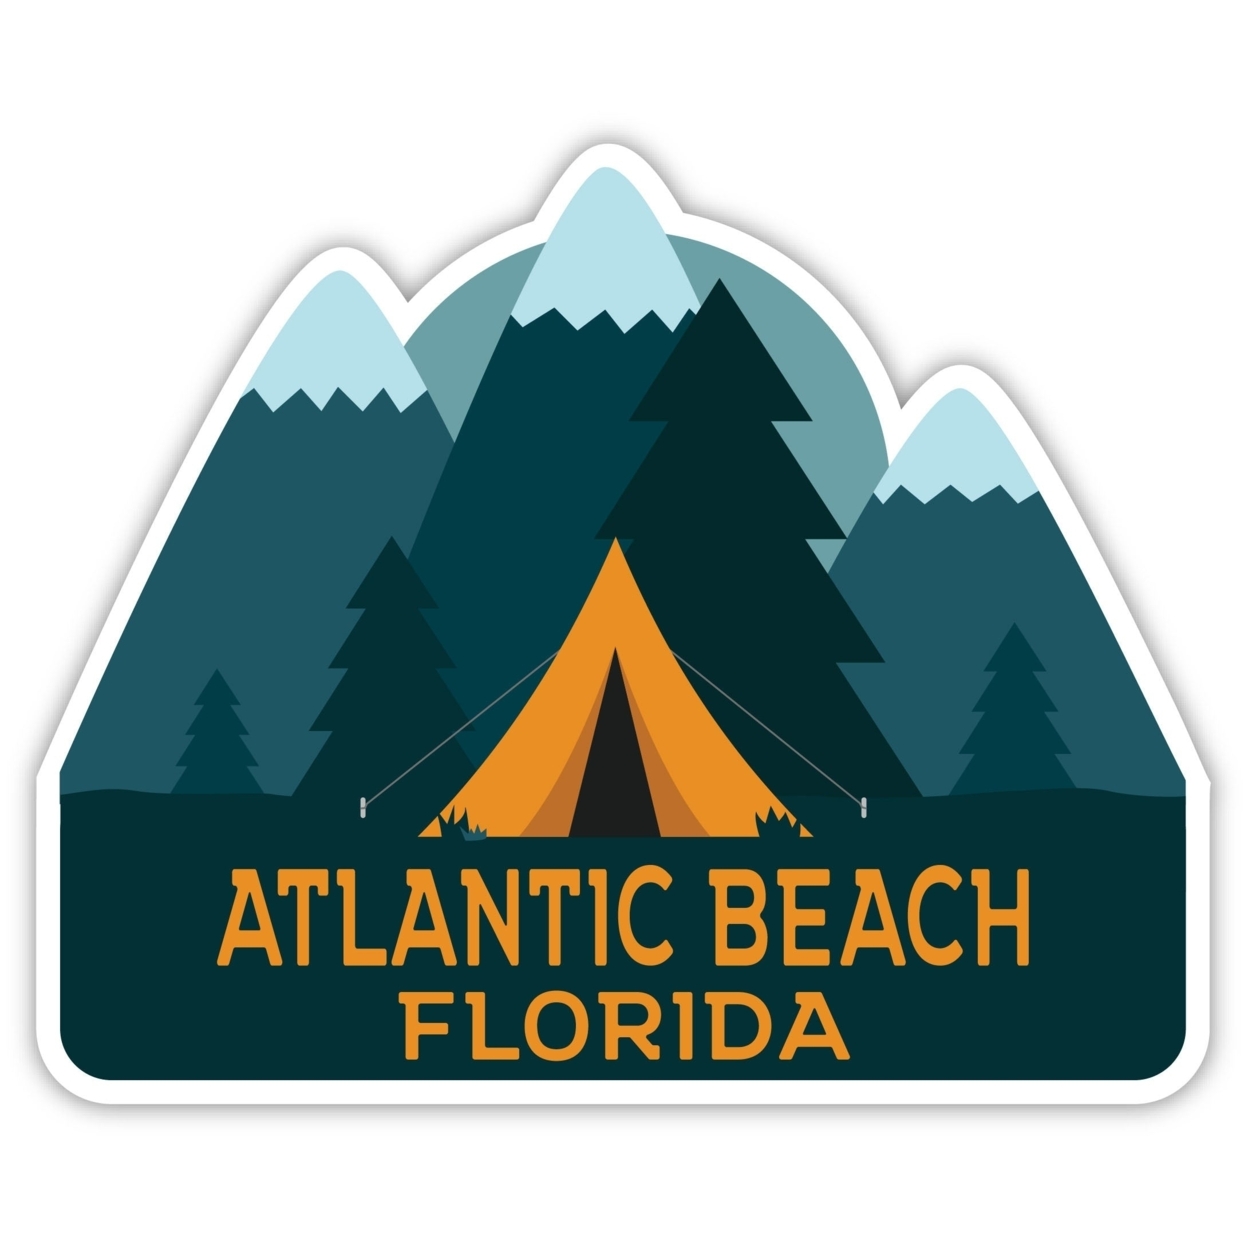 Atlantic Beach Florida Souvenir Decorative Stickers (Choose Theme And Size) - 4-Pack, 4-Inch, Tent